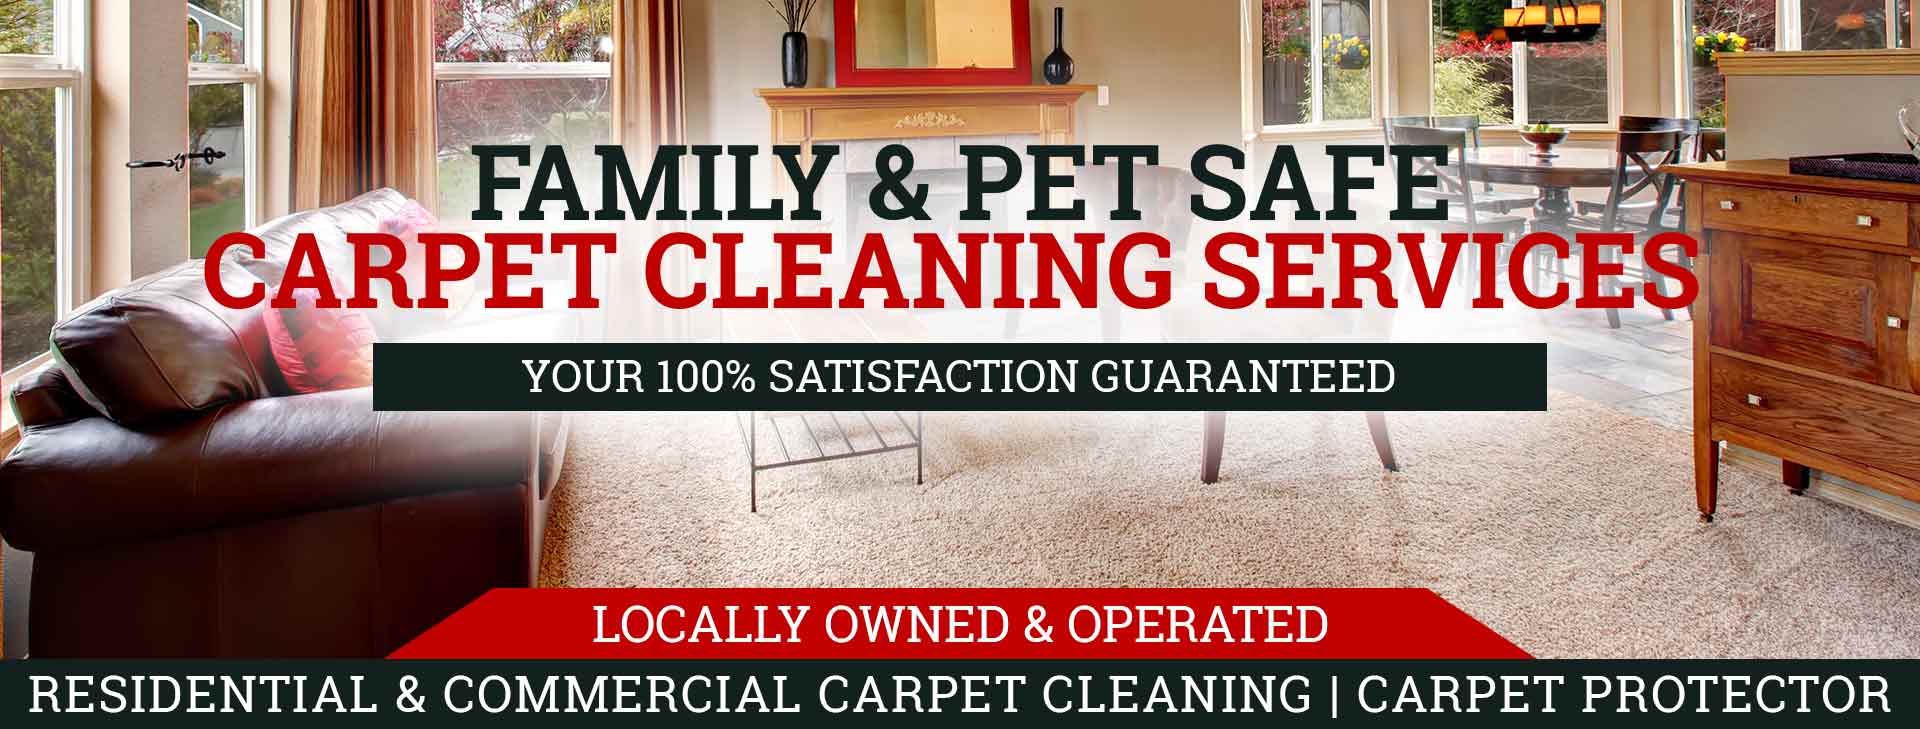 Carpet Cleaning Service In Mesa Arizona